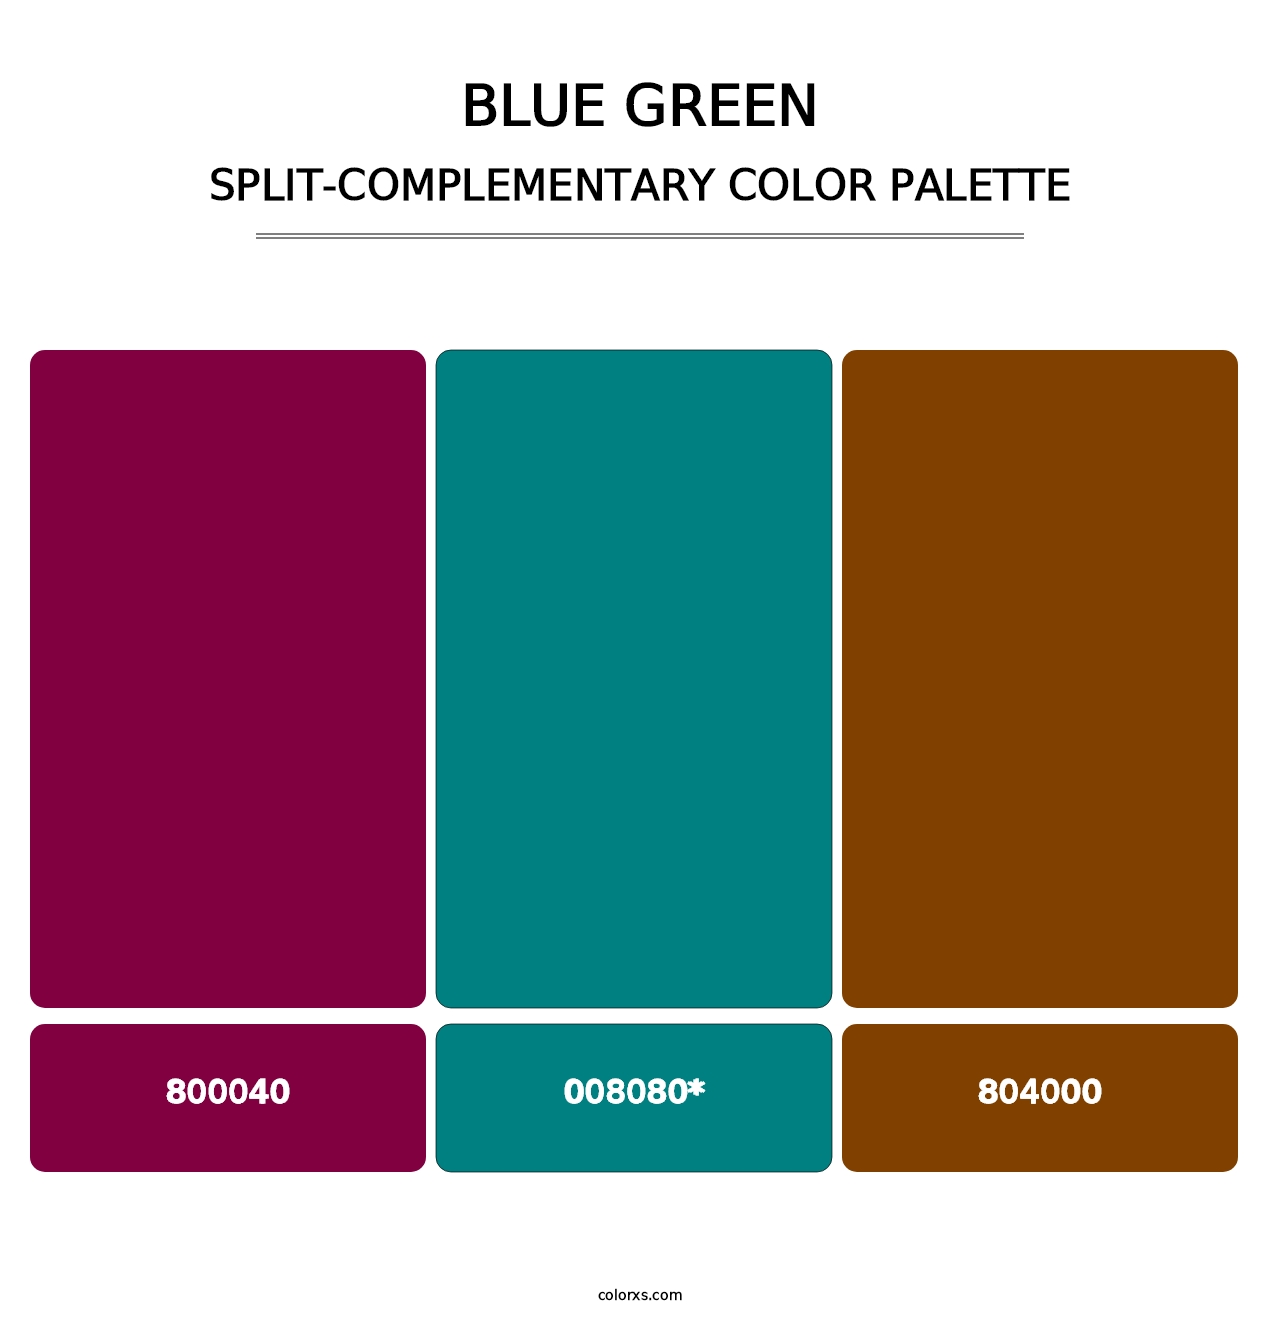 Blue Green - Split-Complementary Color Palette